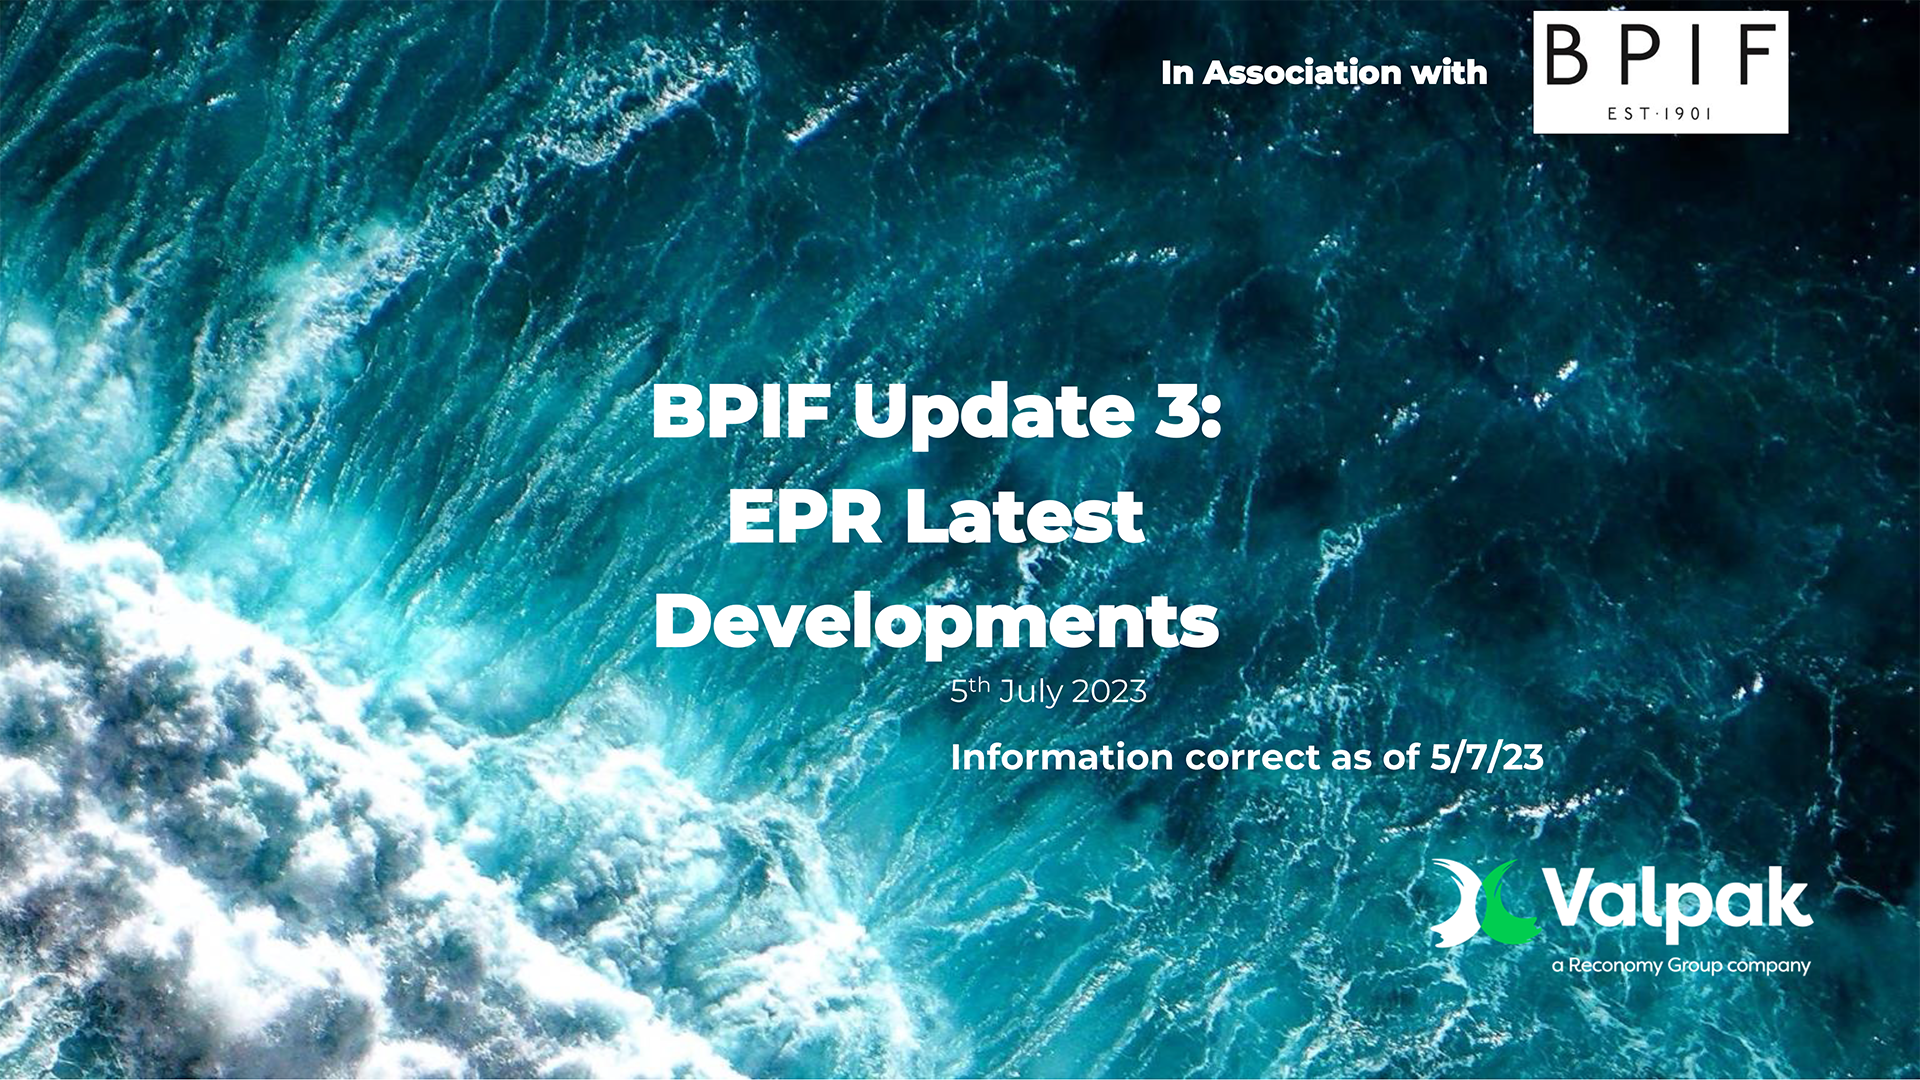 EPR Latest Developments